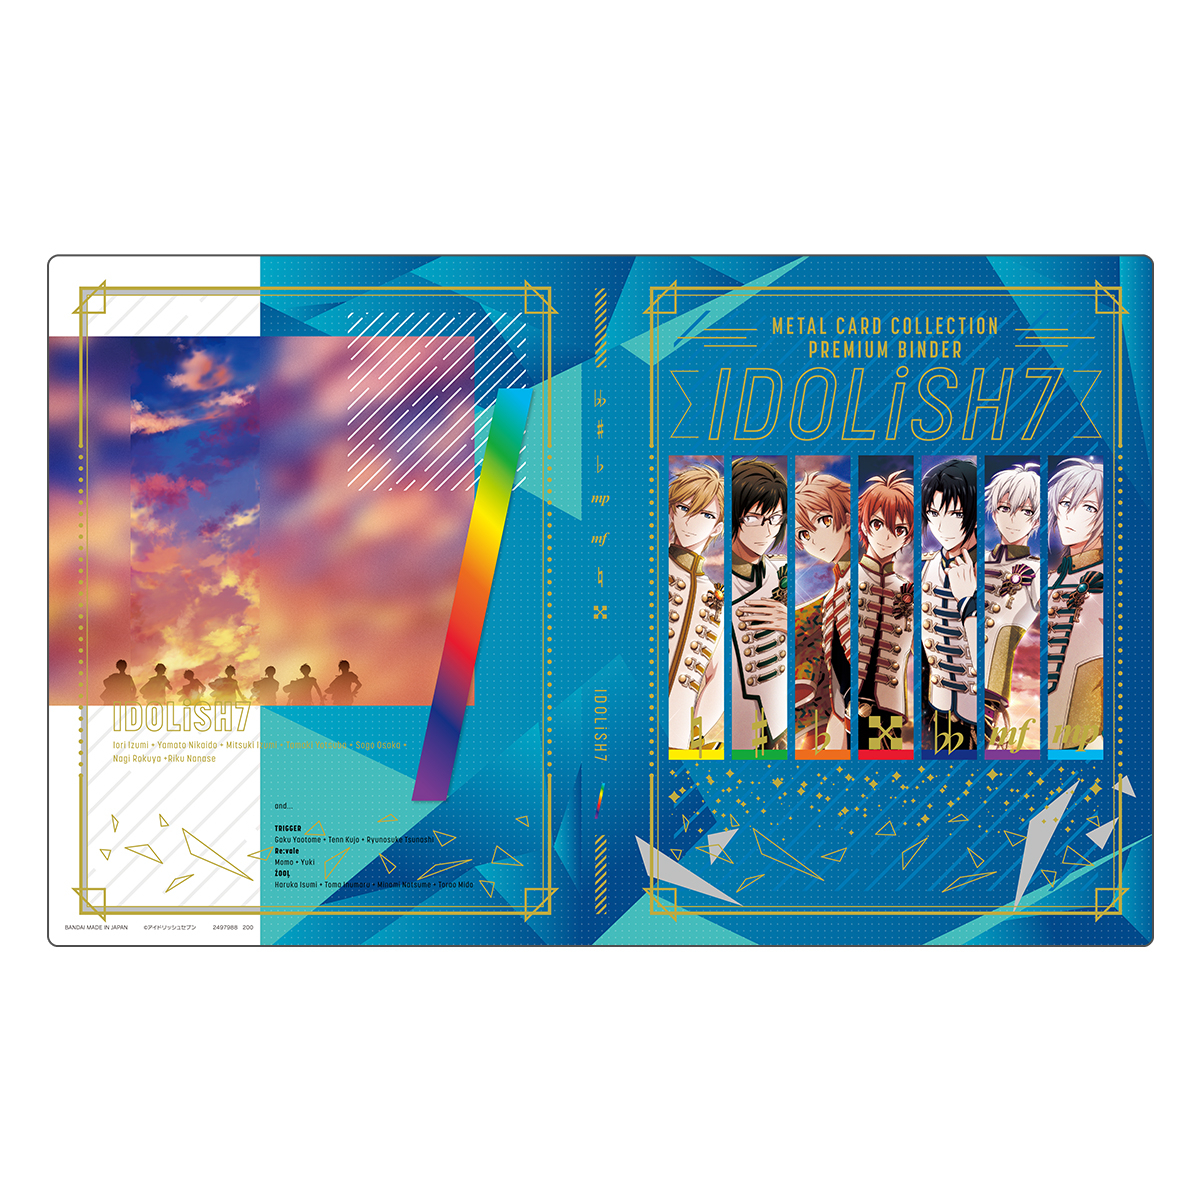 Idolish7 Metal Card Collection Premium Binder | Premium intended for Rokuyo Calendar 2020